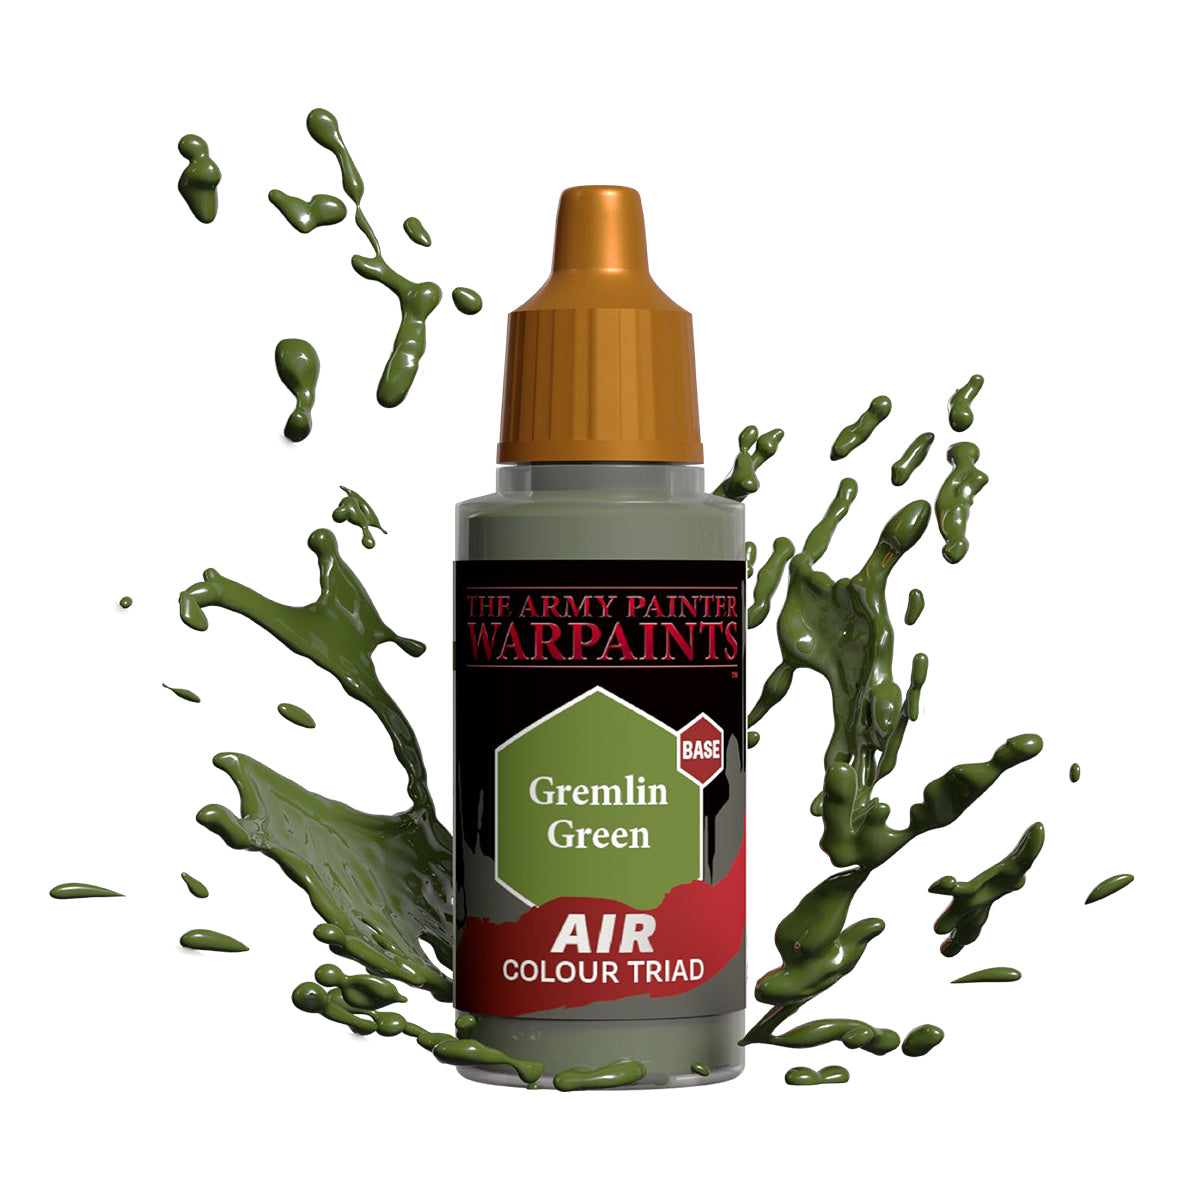 Warpaints Air: Gremlin Green